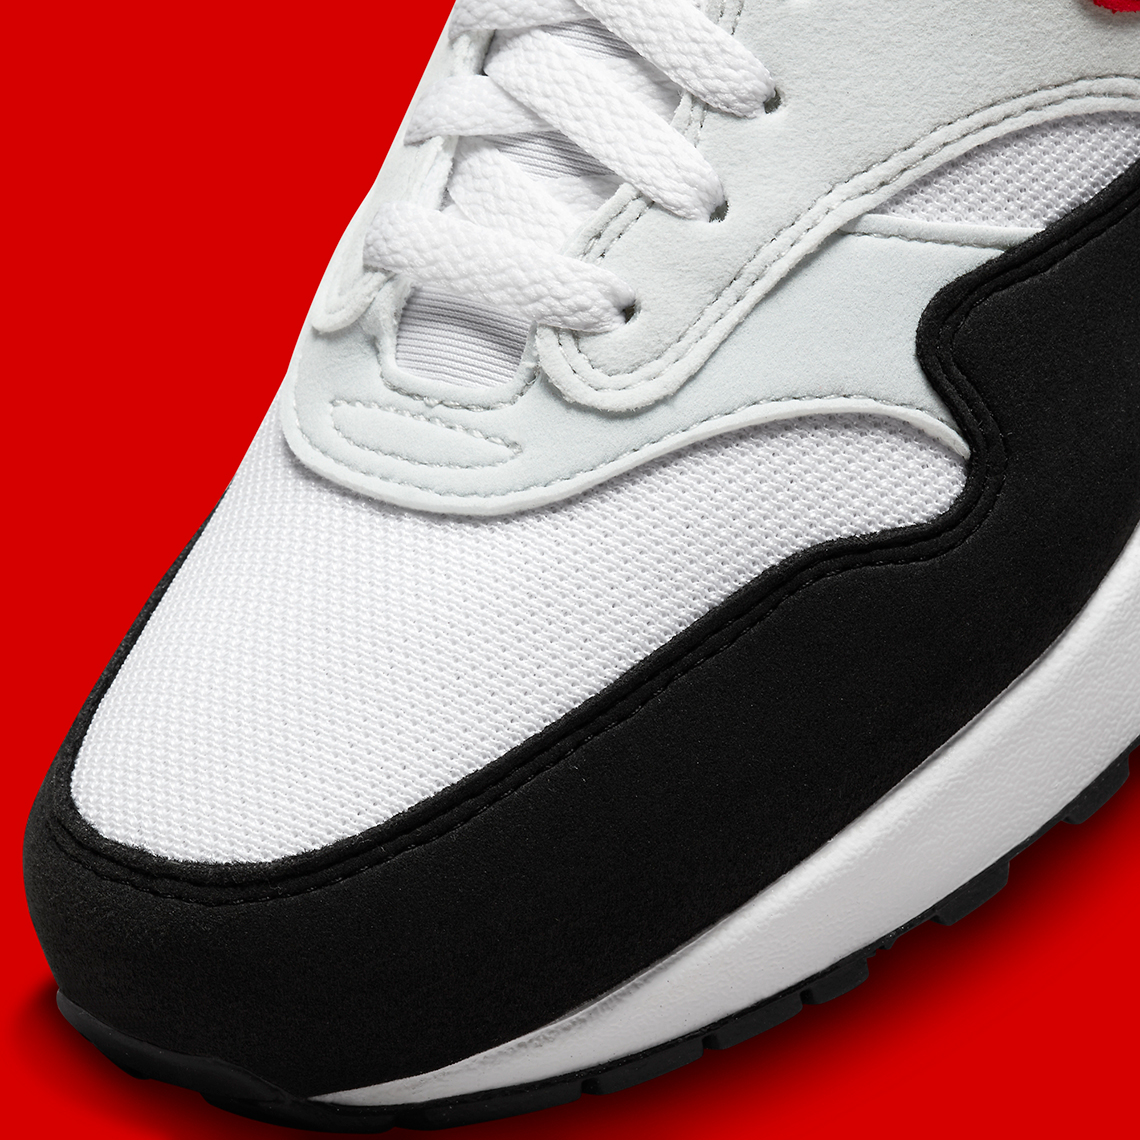 Nike nike dunk comfort denim dress code women shoes Black Red Fd9082 101 4